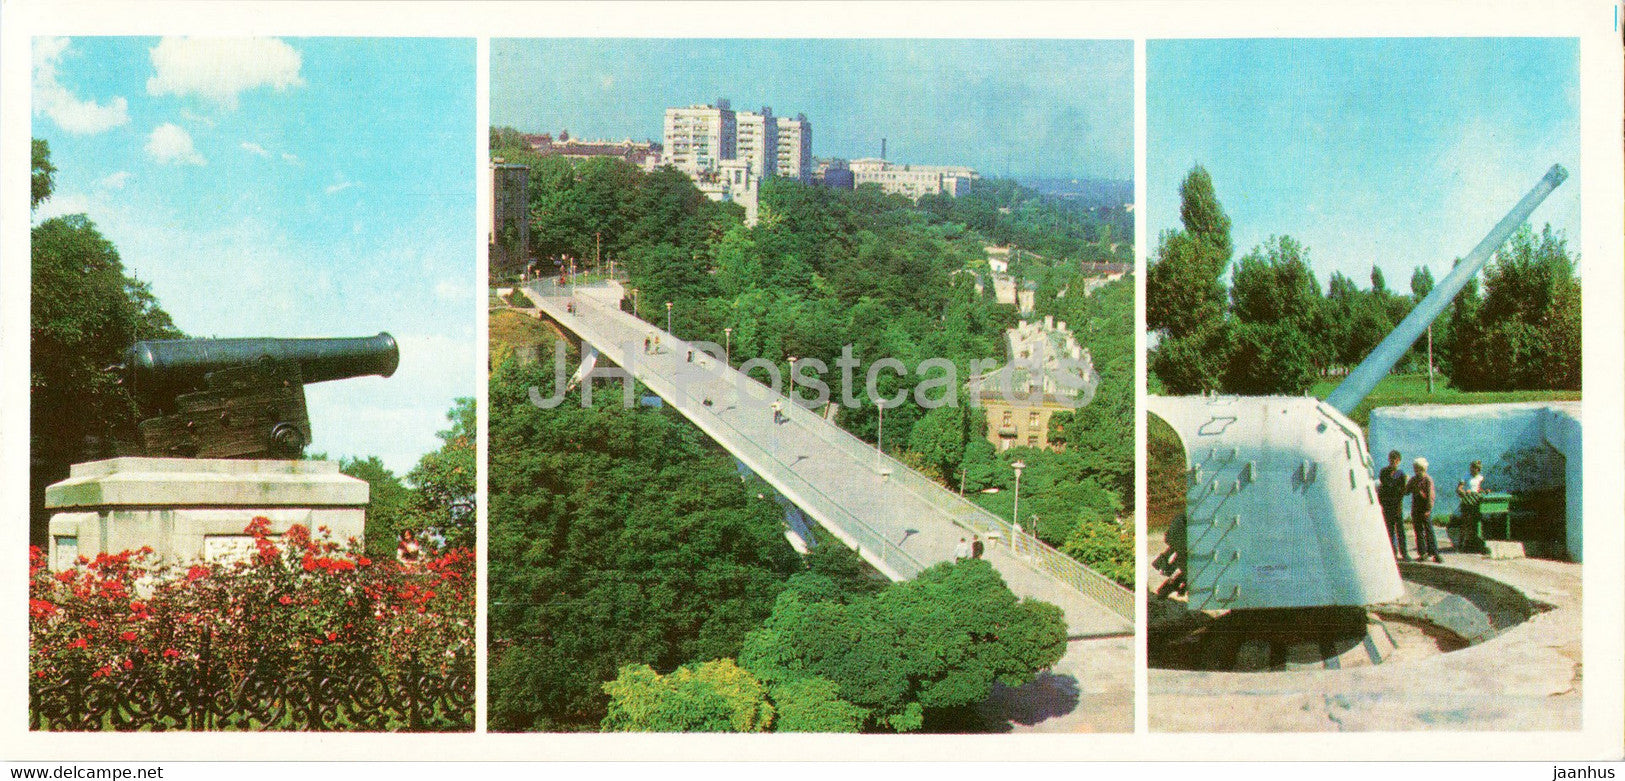 Odessa - cannon from english frigate Tiger - bridge view - cannon - 1982 - Ukraine USSR - unused - JH Postcards